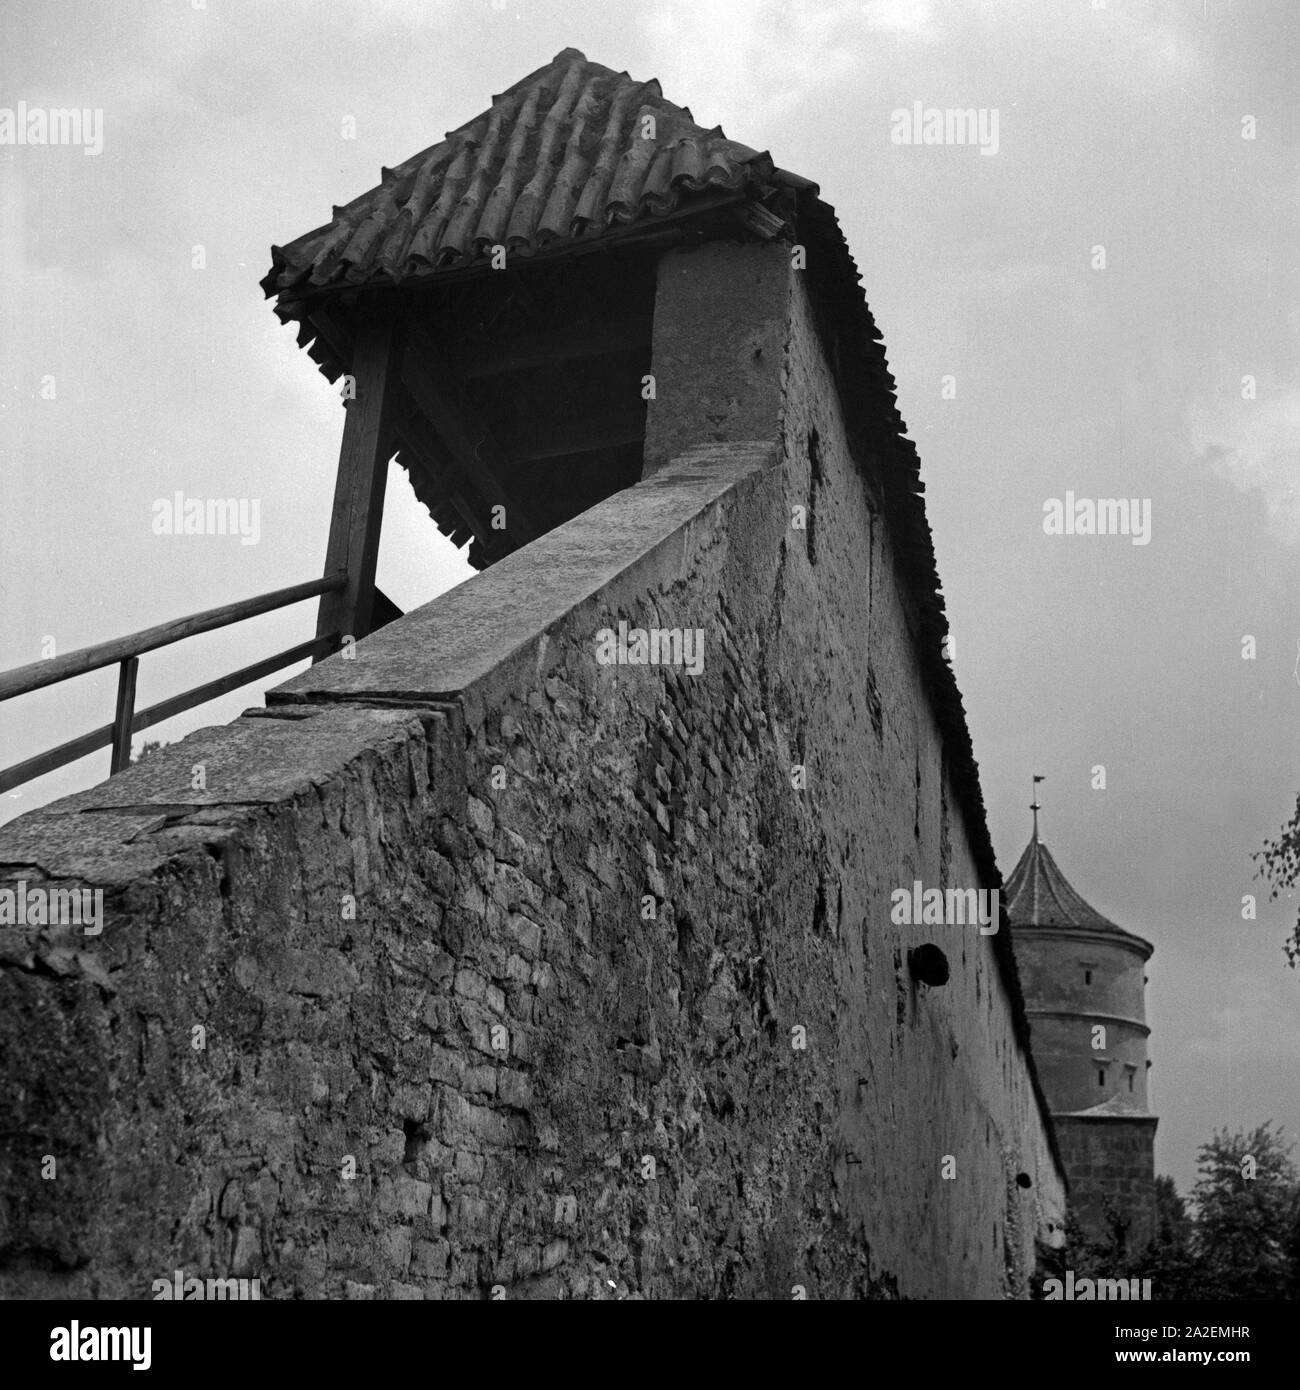 Aufgang der Burg zum Wehrgang dans Harburg dans Schwaben, Deutschland 1930 er Jahre. Escalier de la balustrade de Harburg château, Allemagne 1930. Banque D'Images